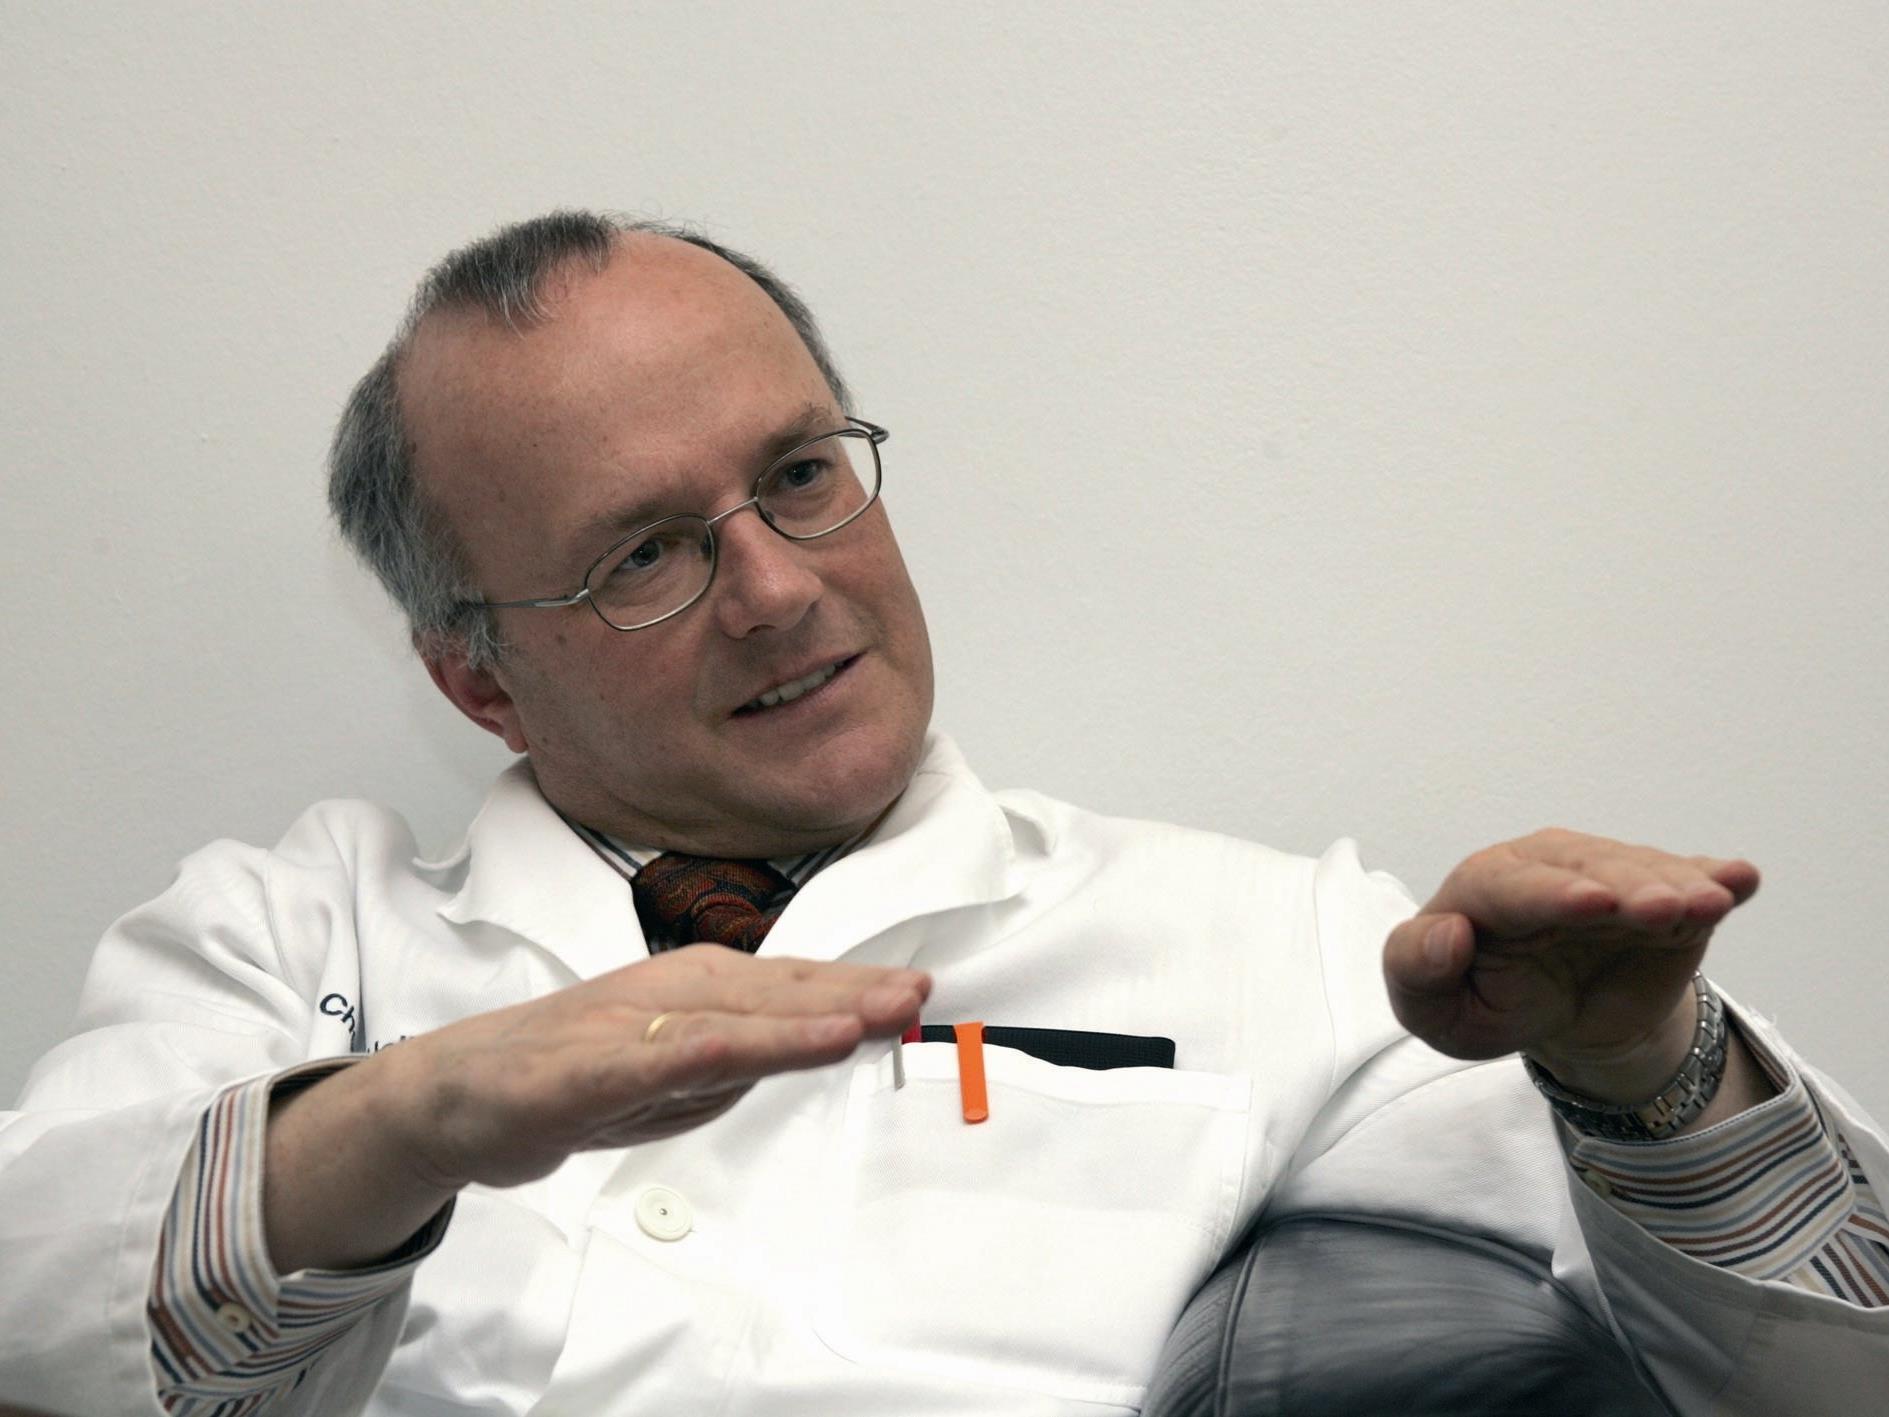 Prof. Dr. Reinhard Haller